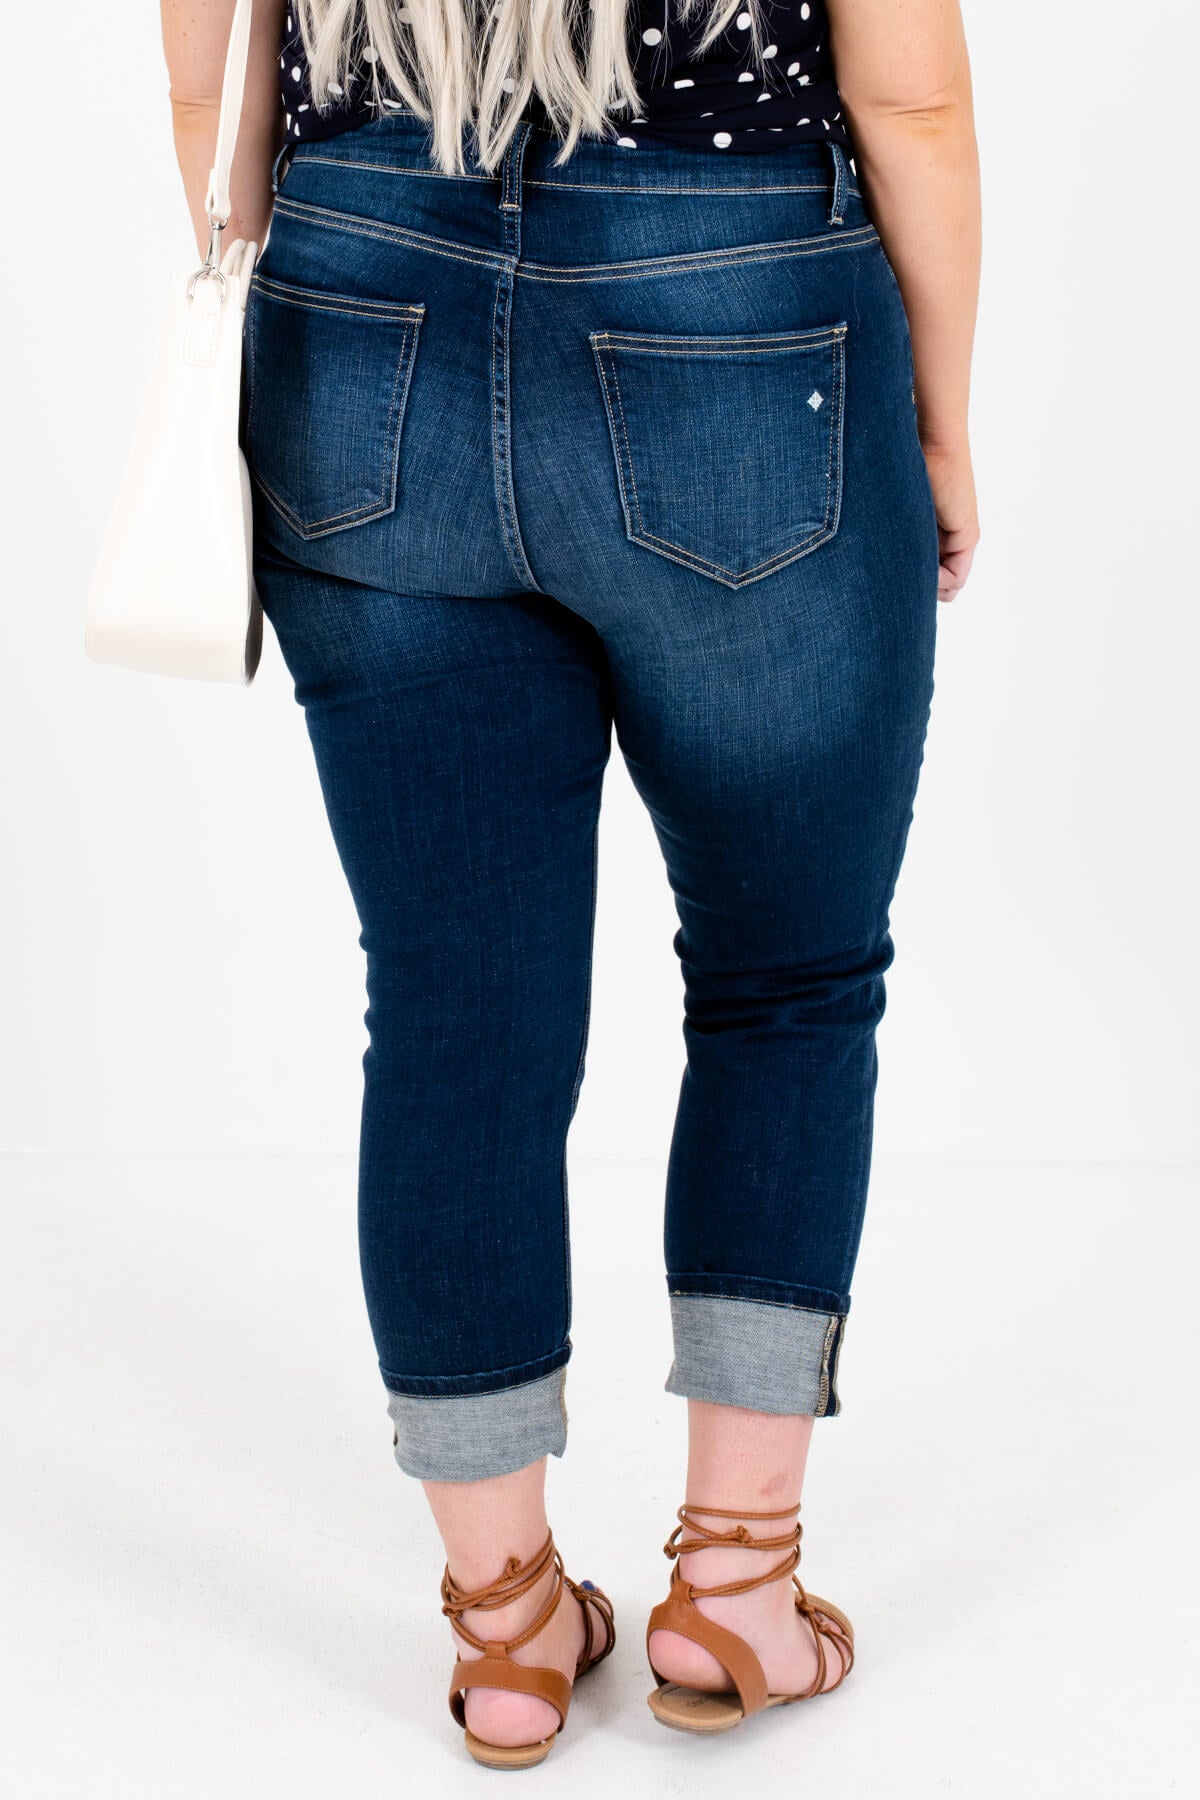 Women's Dark Wash Denim Blue Plus Size Boutique Jeans with Pockets